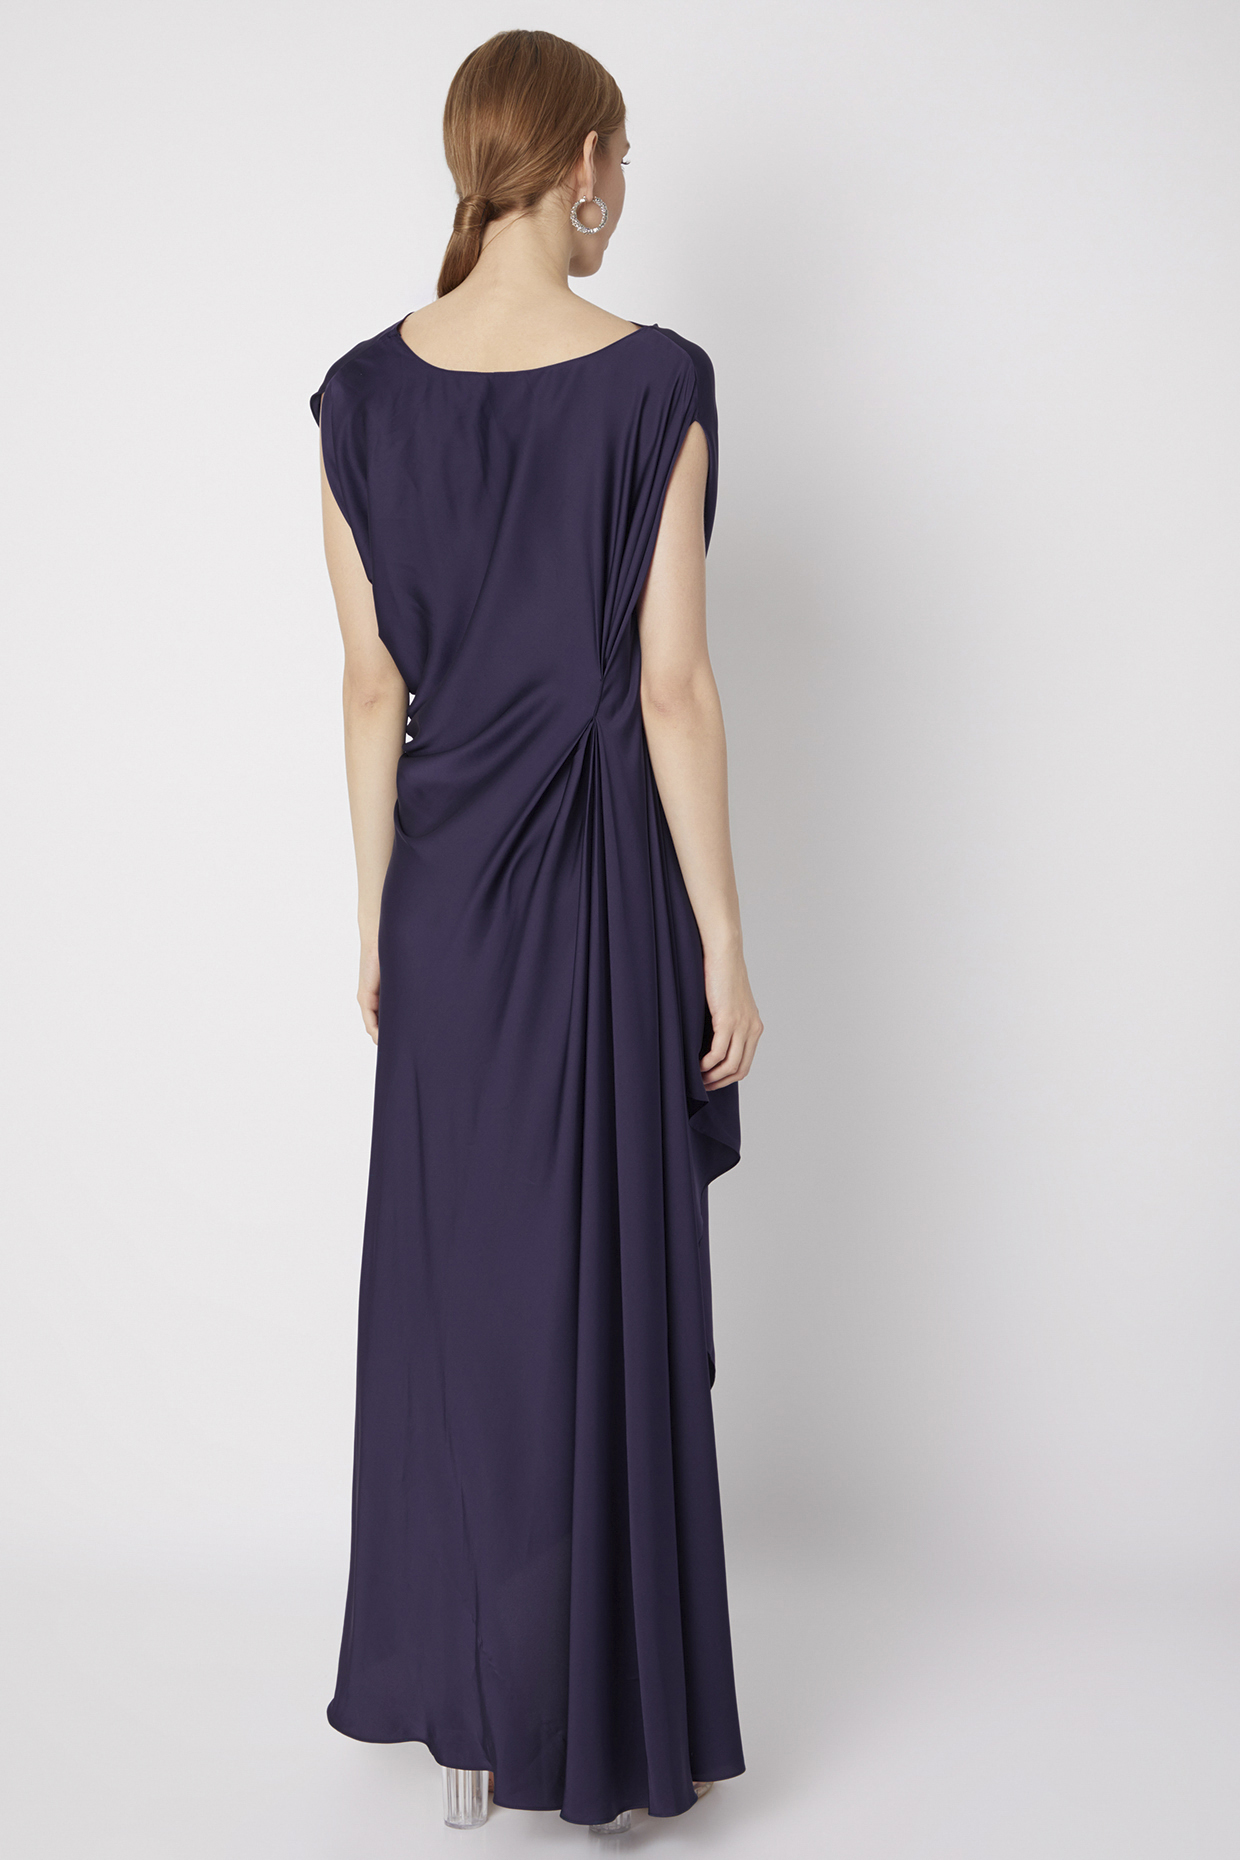 Violet Asymetric Drape Gown